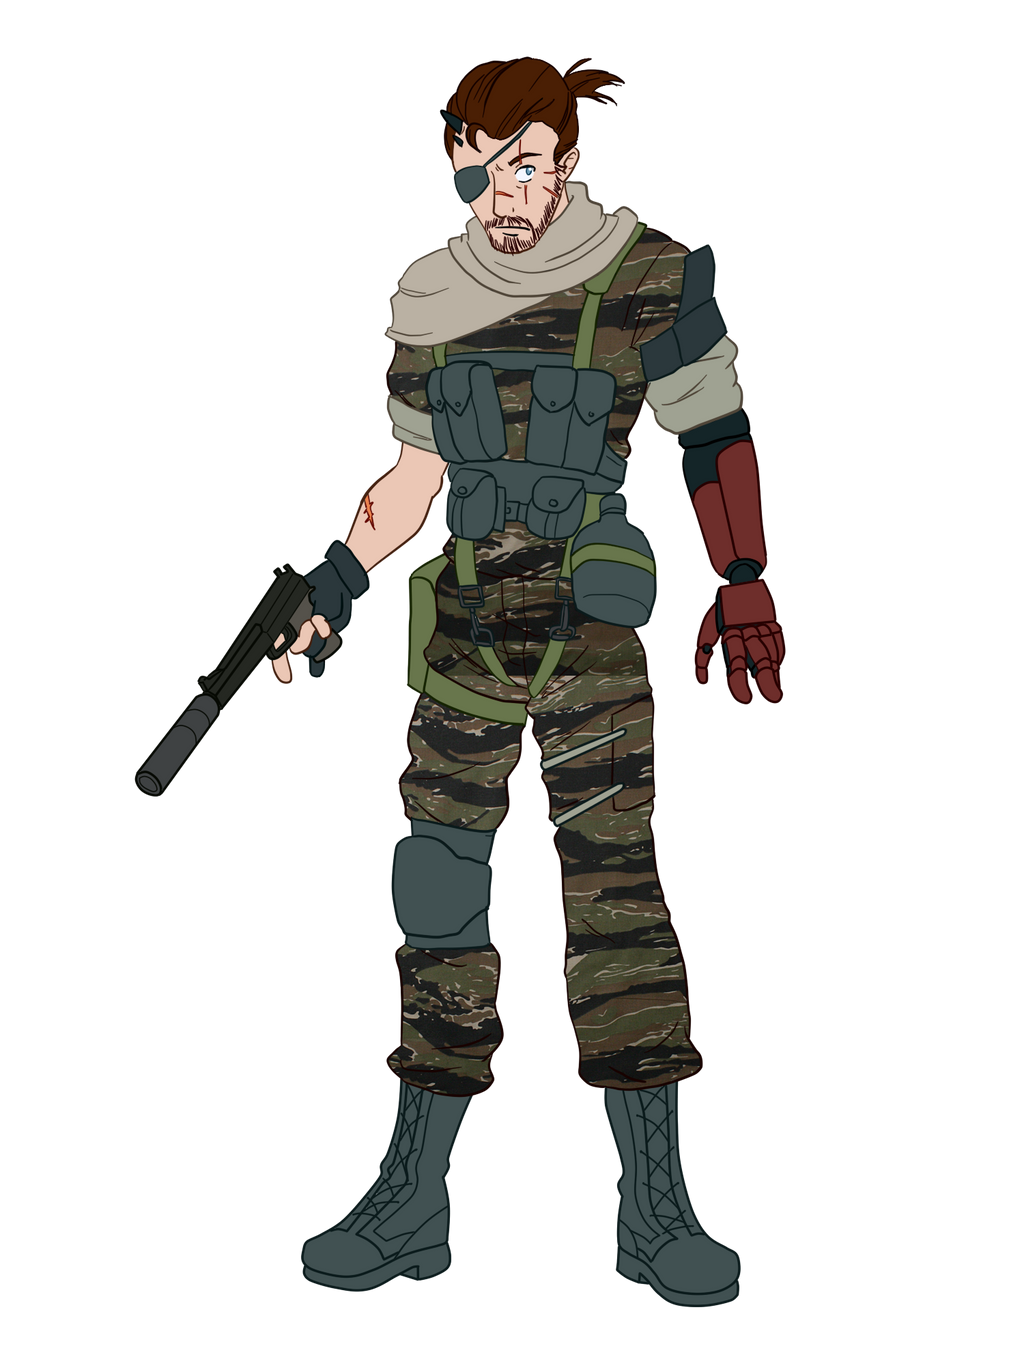 Punished Snake: From Metal Gear Solid V by JinglesRasco on DeviantArt